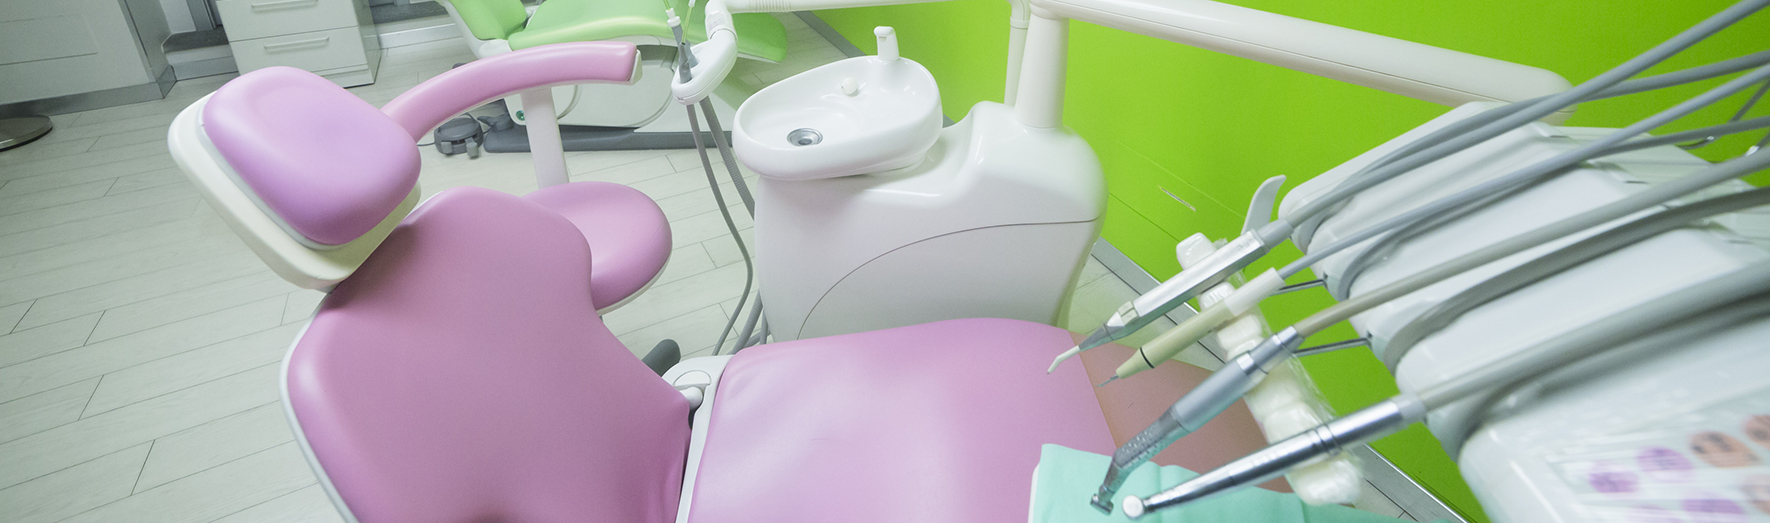 dettagli poltrona dentista studio sorry-dent moncalieri